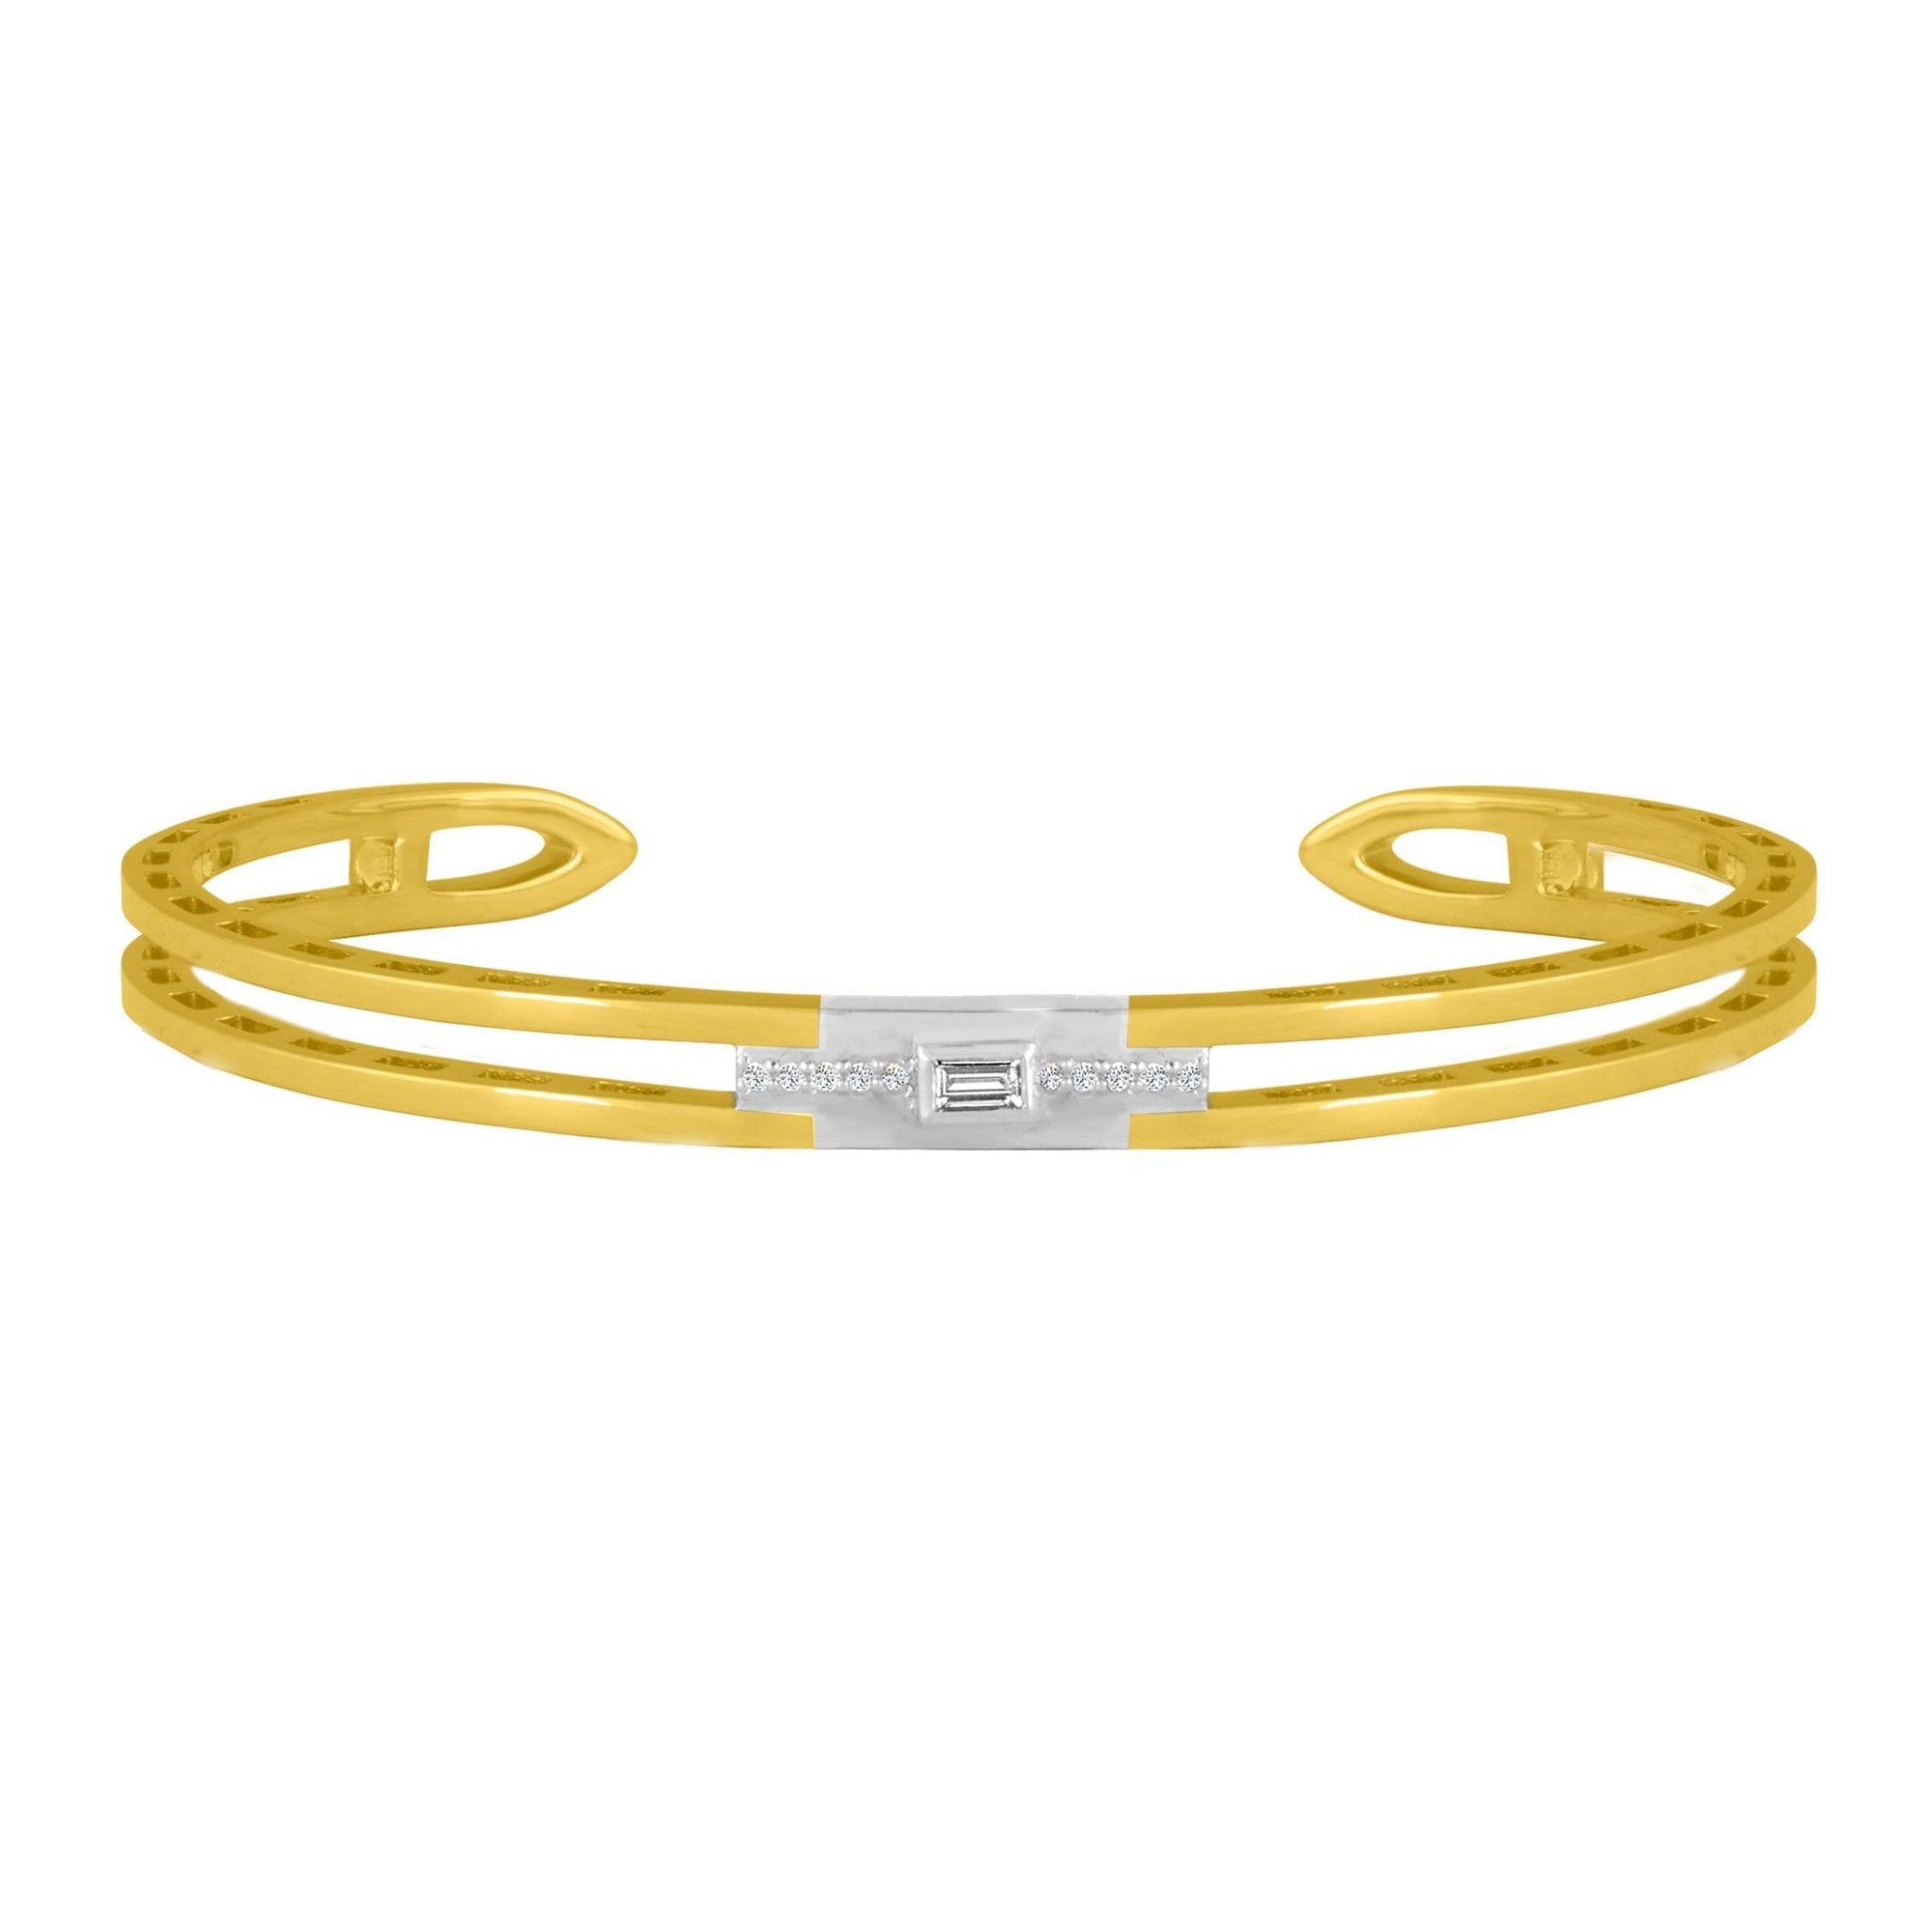 Edge Cuff Bracelet: 18k Yellow Gold